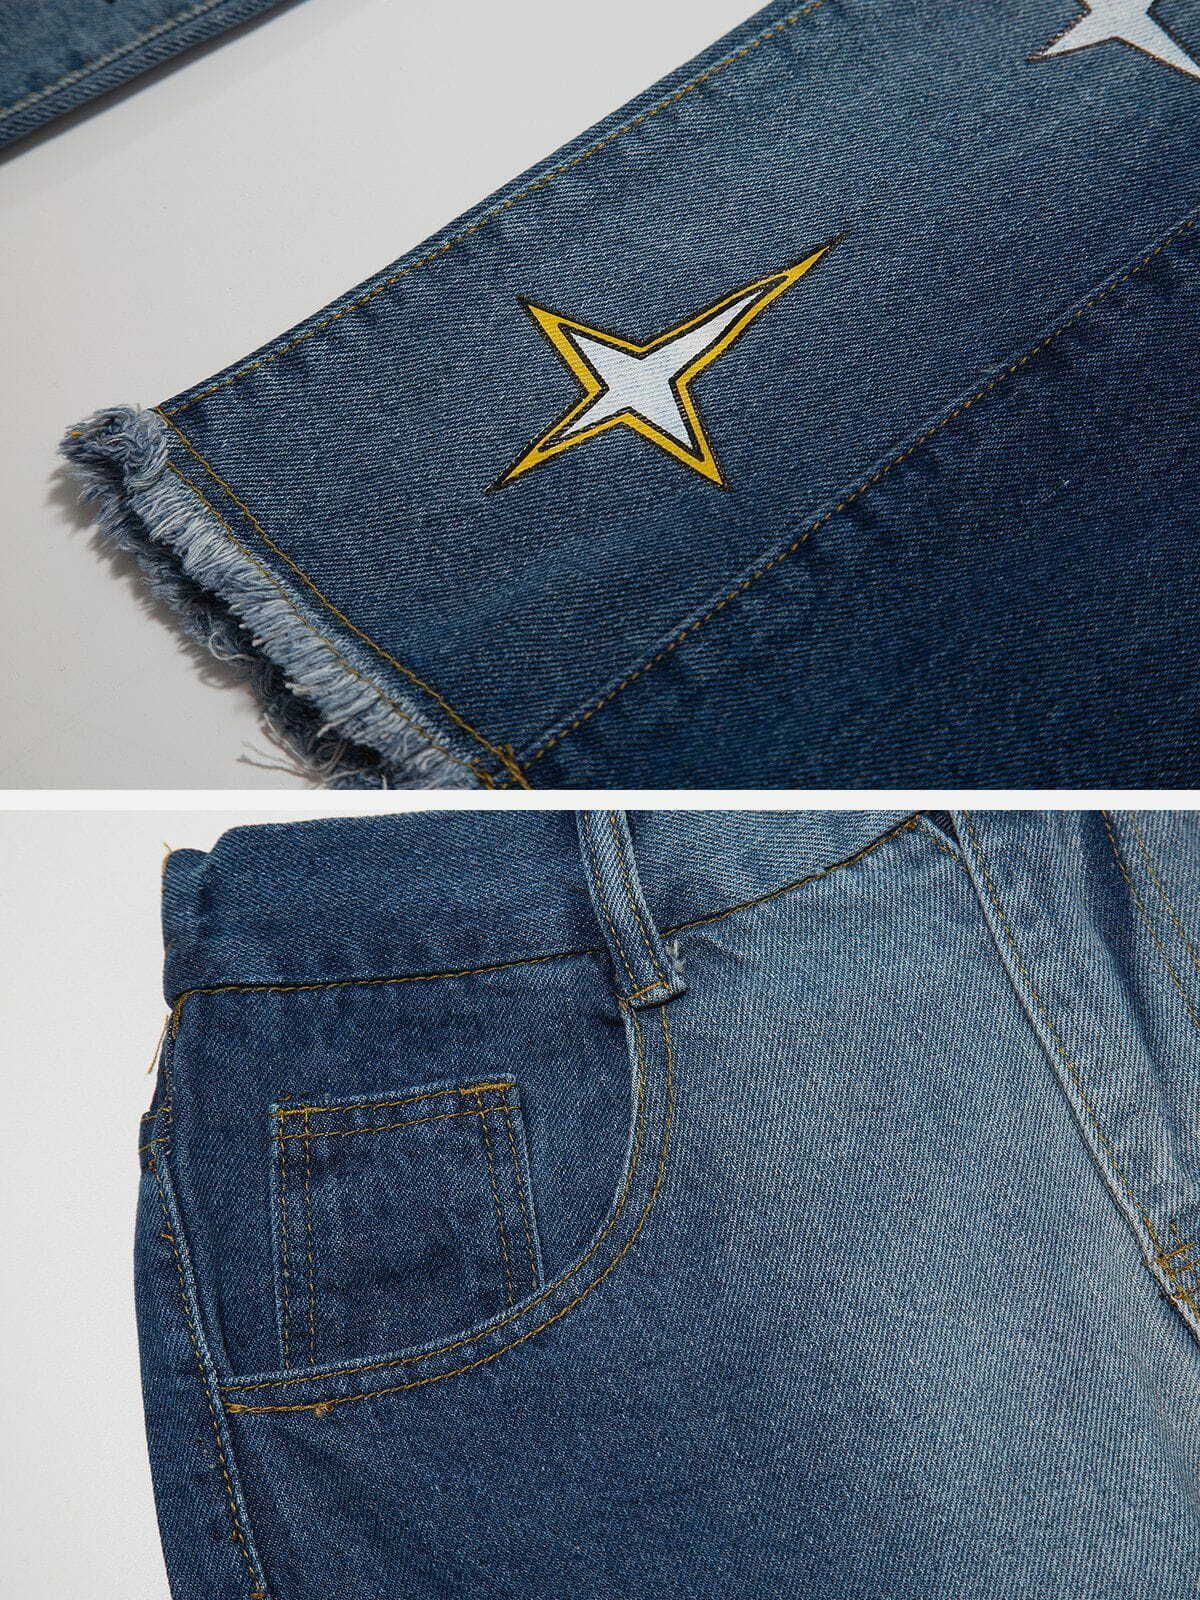 vibrant star graphic jeans edgy gradient design 8096